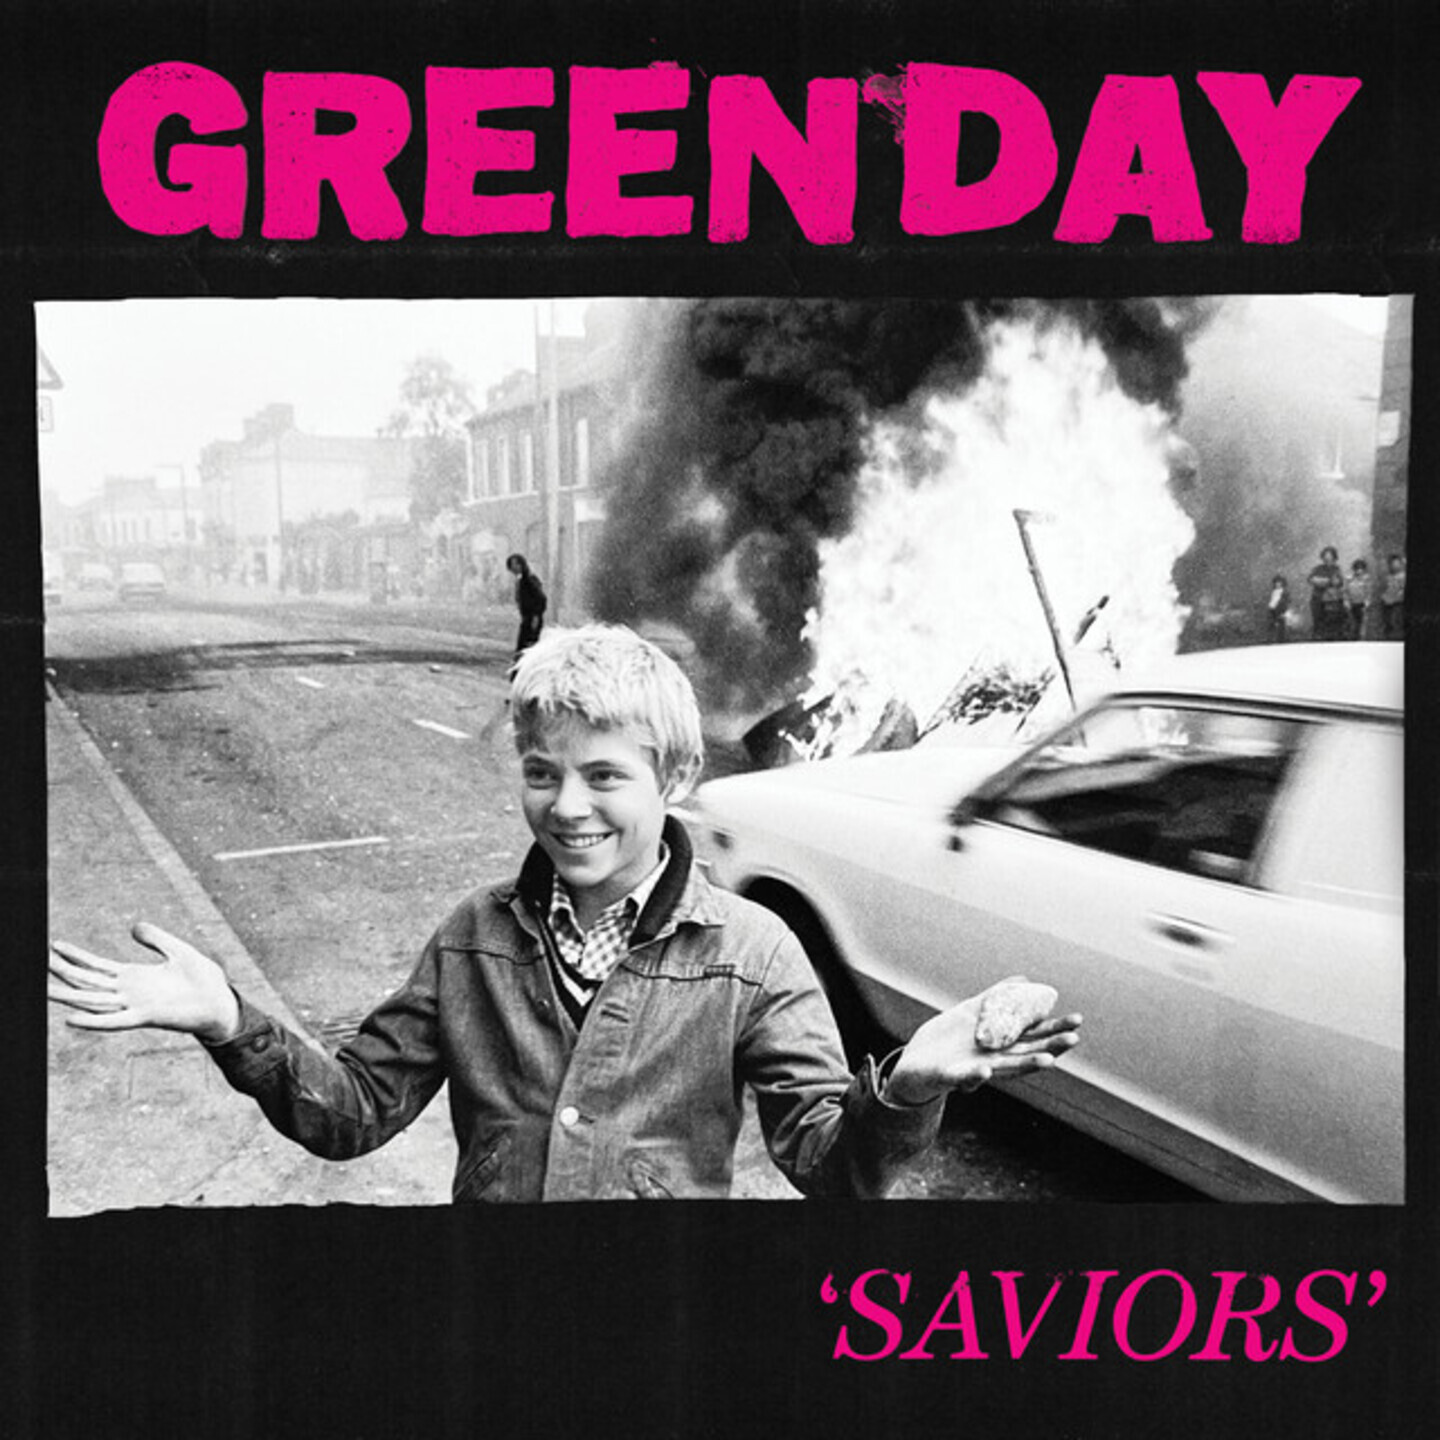 GREEN DAY - Saviors LP Magenta & Black vinyl